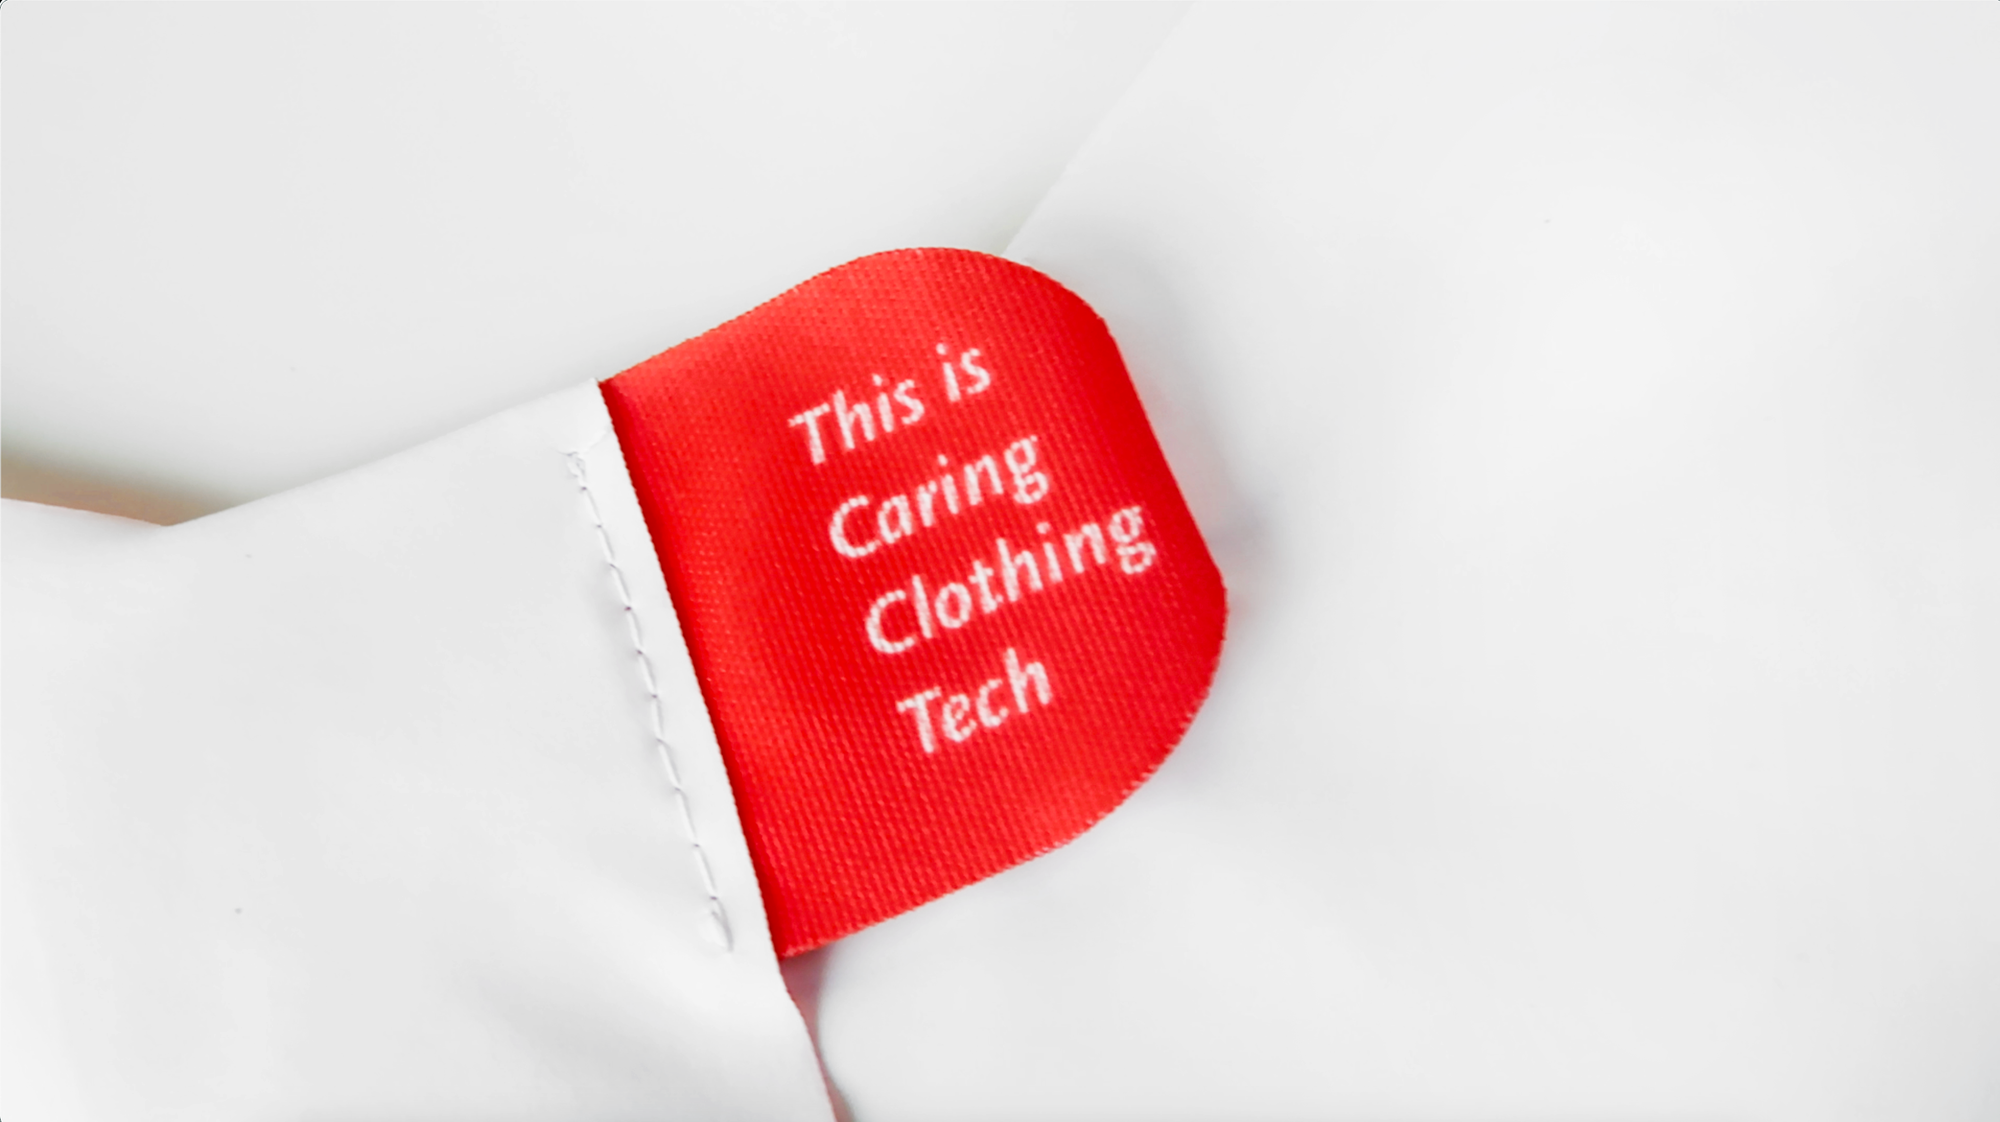 Caring Clothing Tech